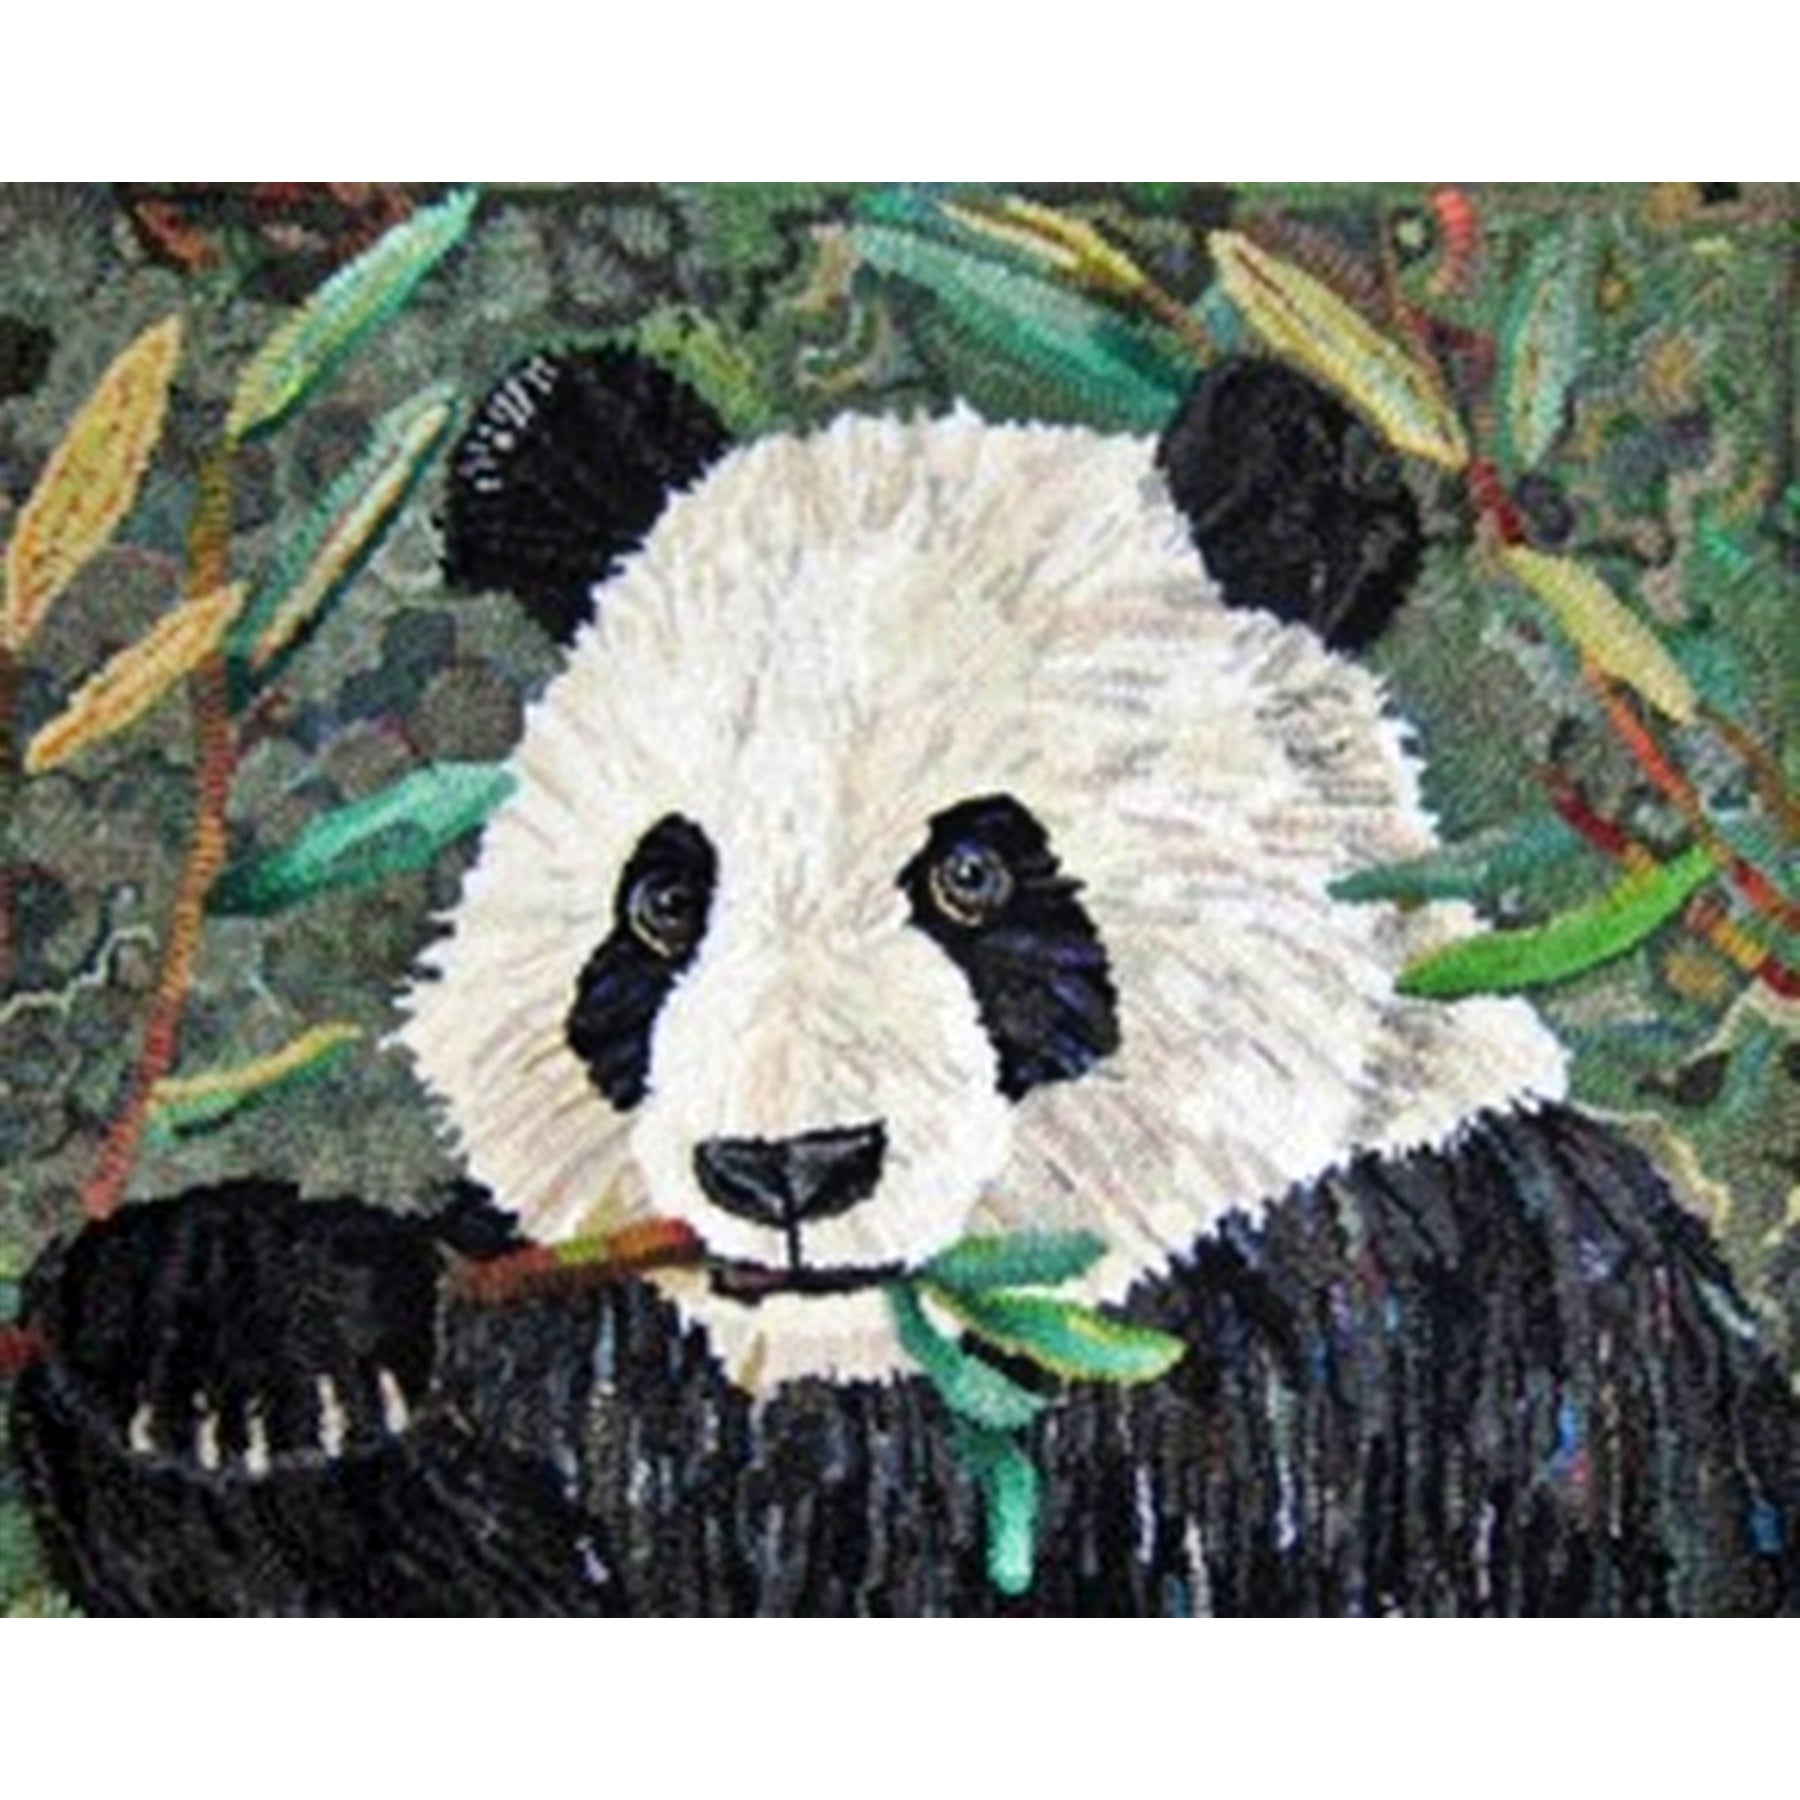 Panda Bear, rug hooked by Cheryl Bollenbach